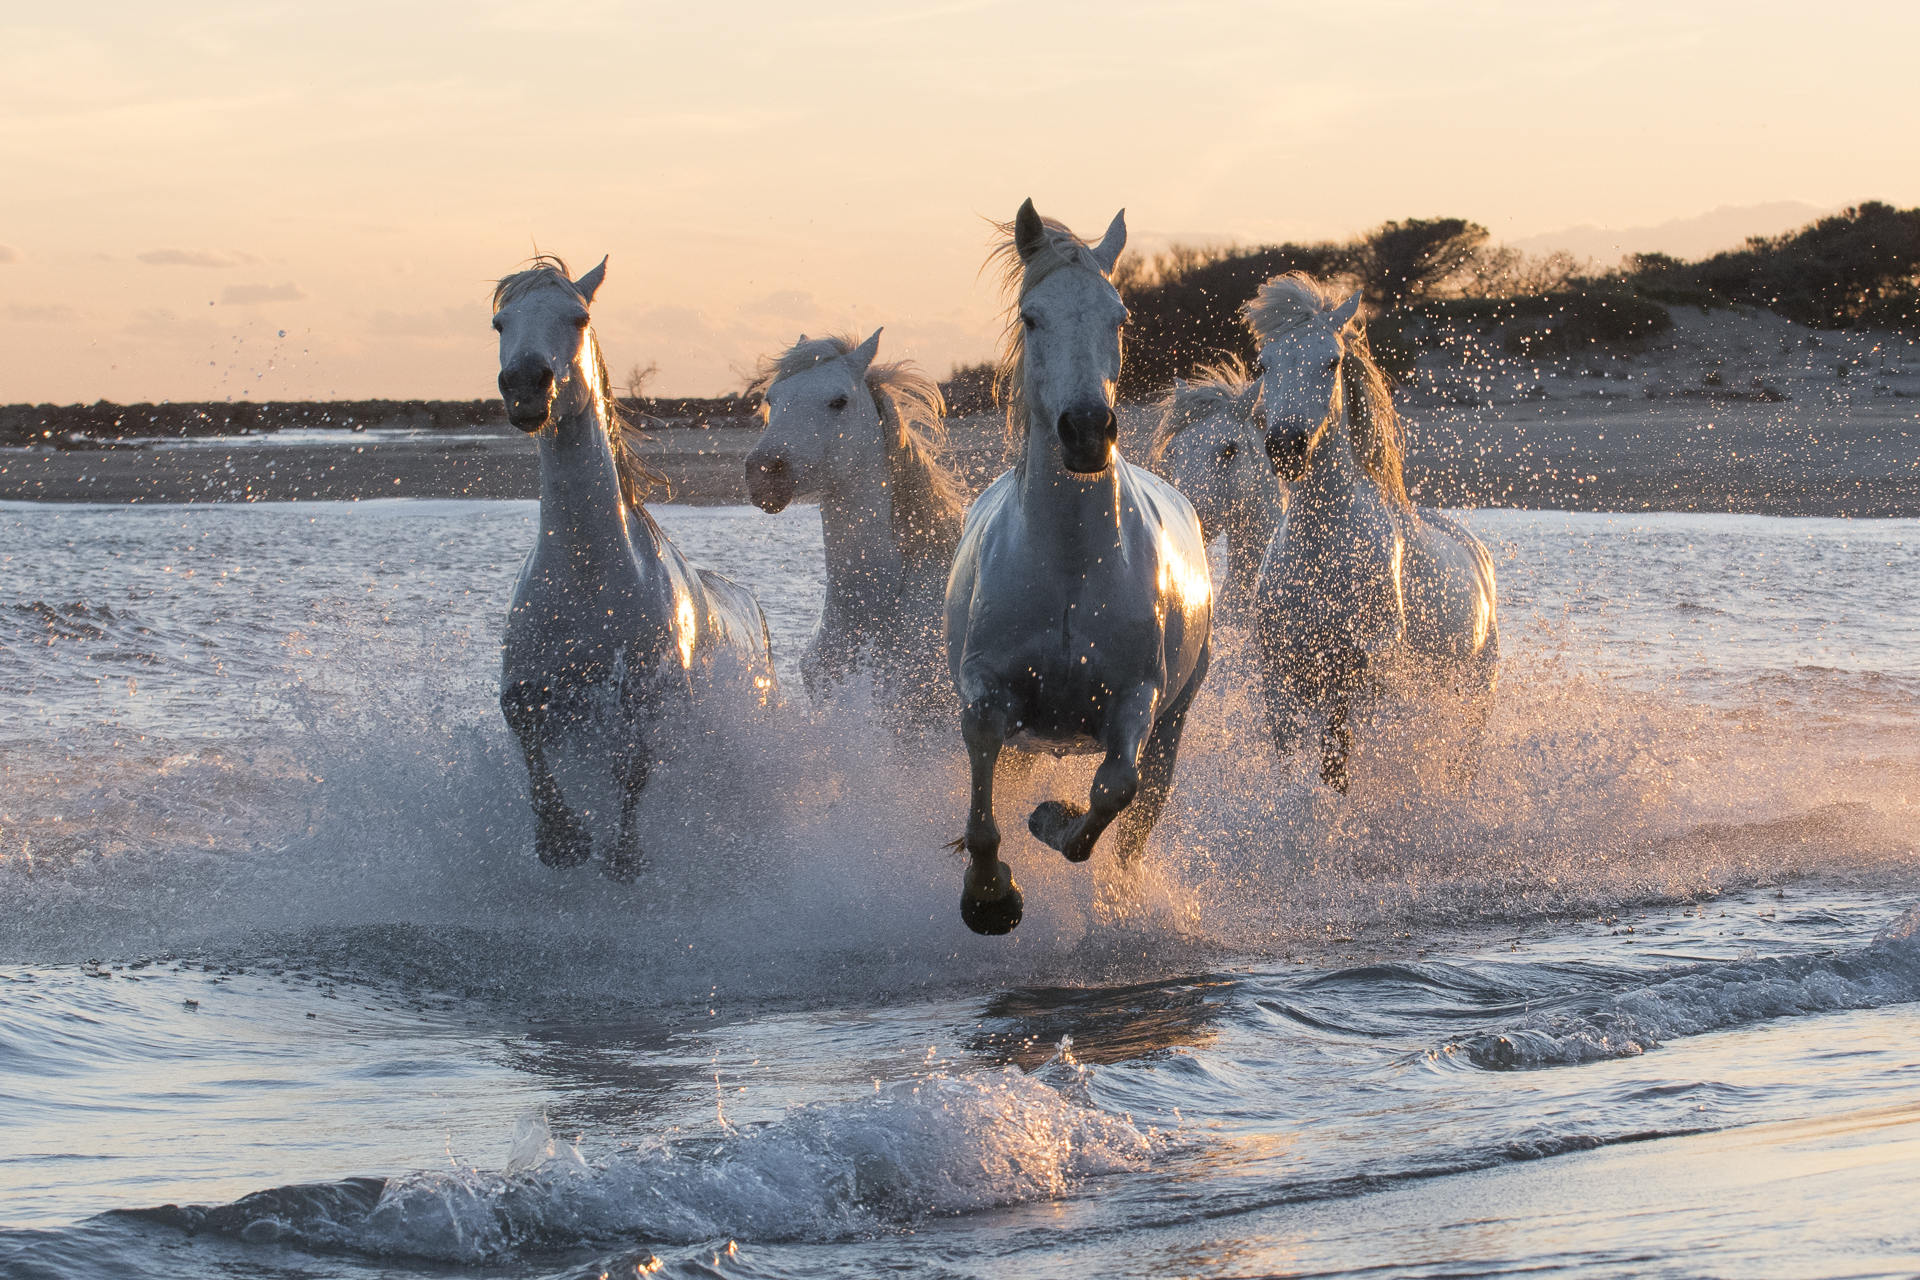 Horses running on a Mediterranean beach. Parc naturel régional de Camargue. France.